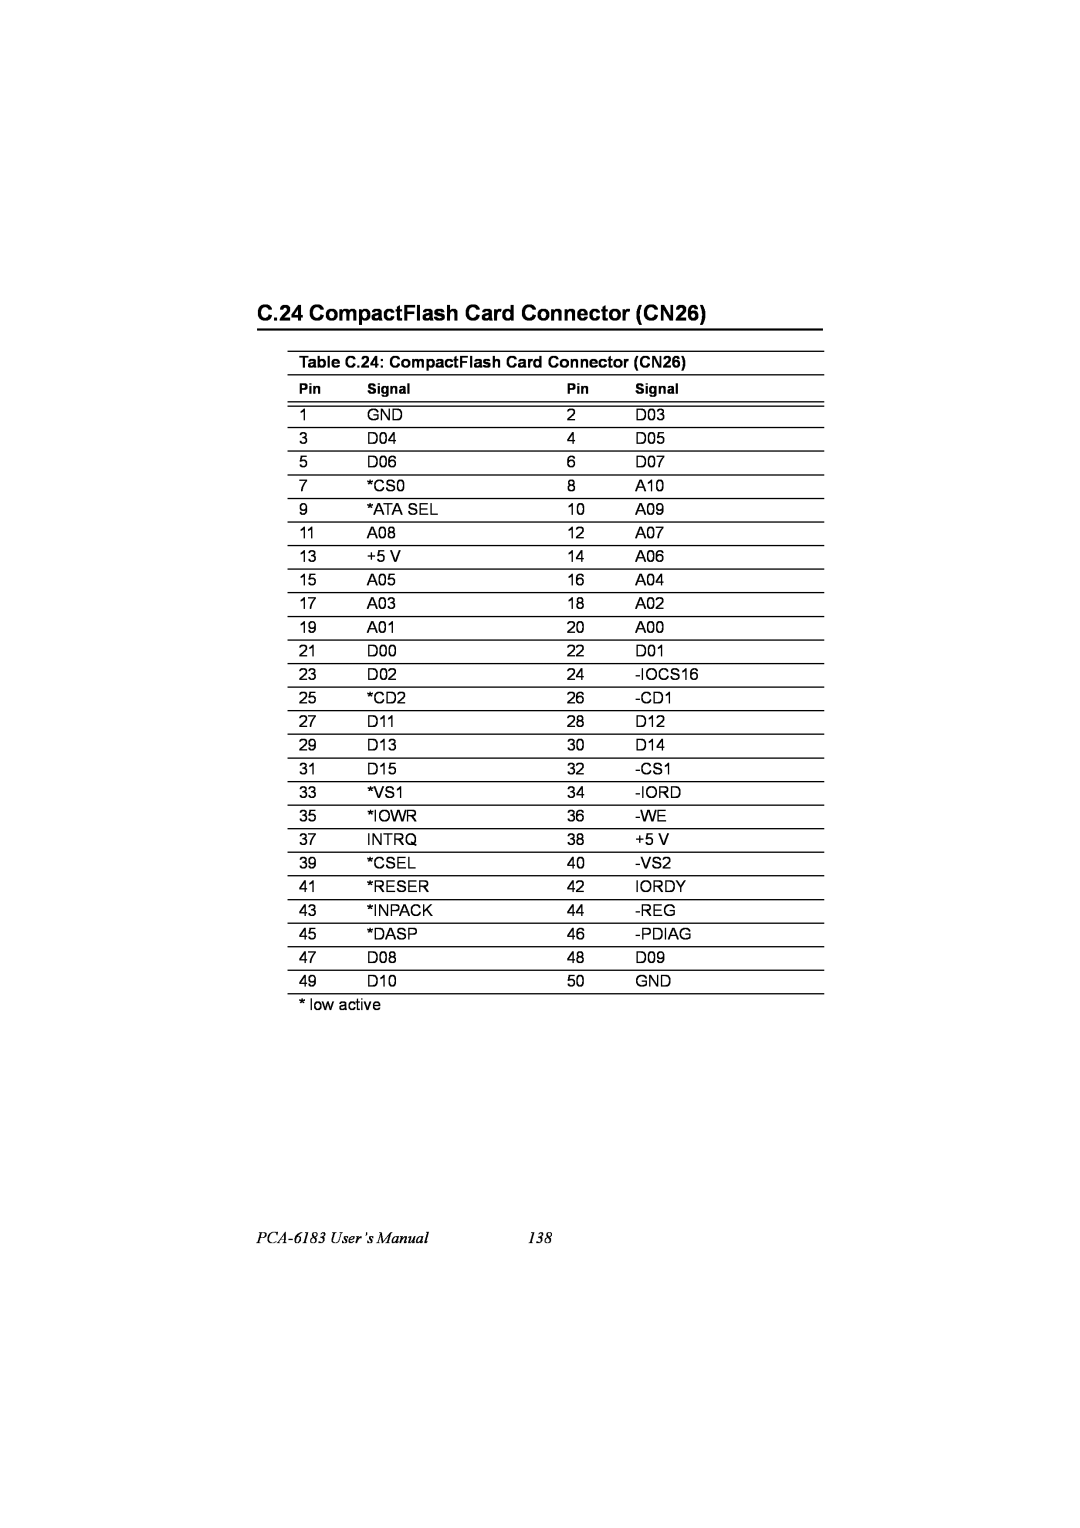 IBM PCM-9575, 100/10 user manual Table C.24 CompactFlash Card Connector CN26, PCA-6183 User’s Manual 